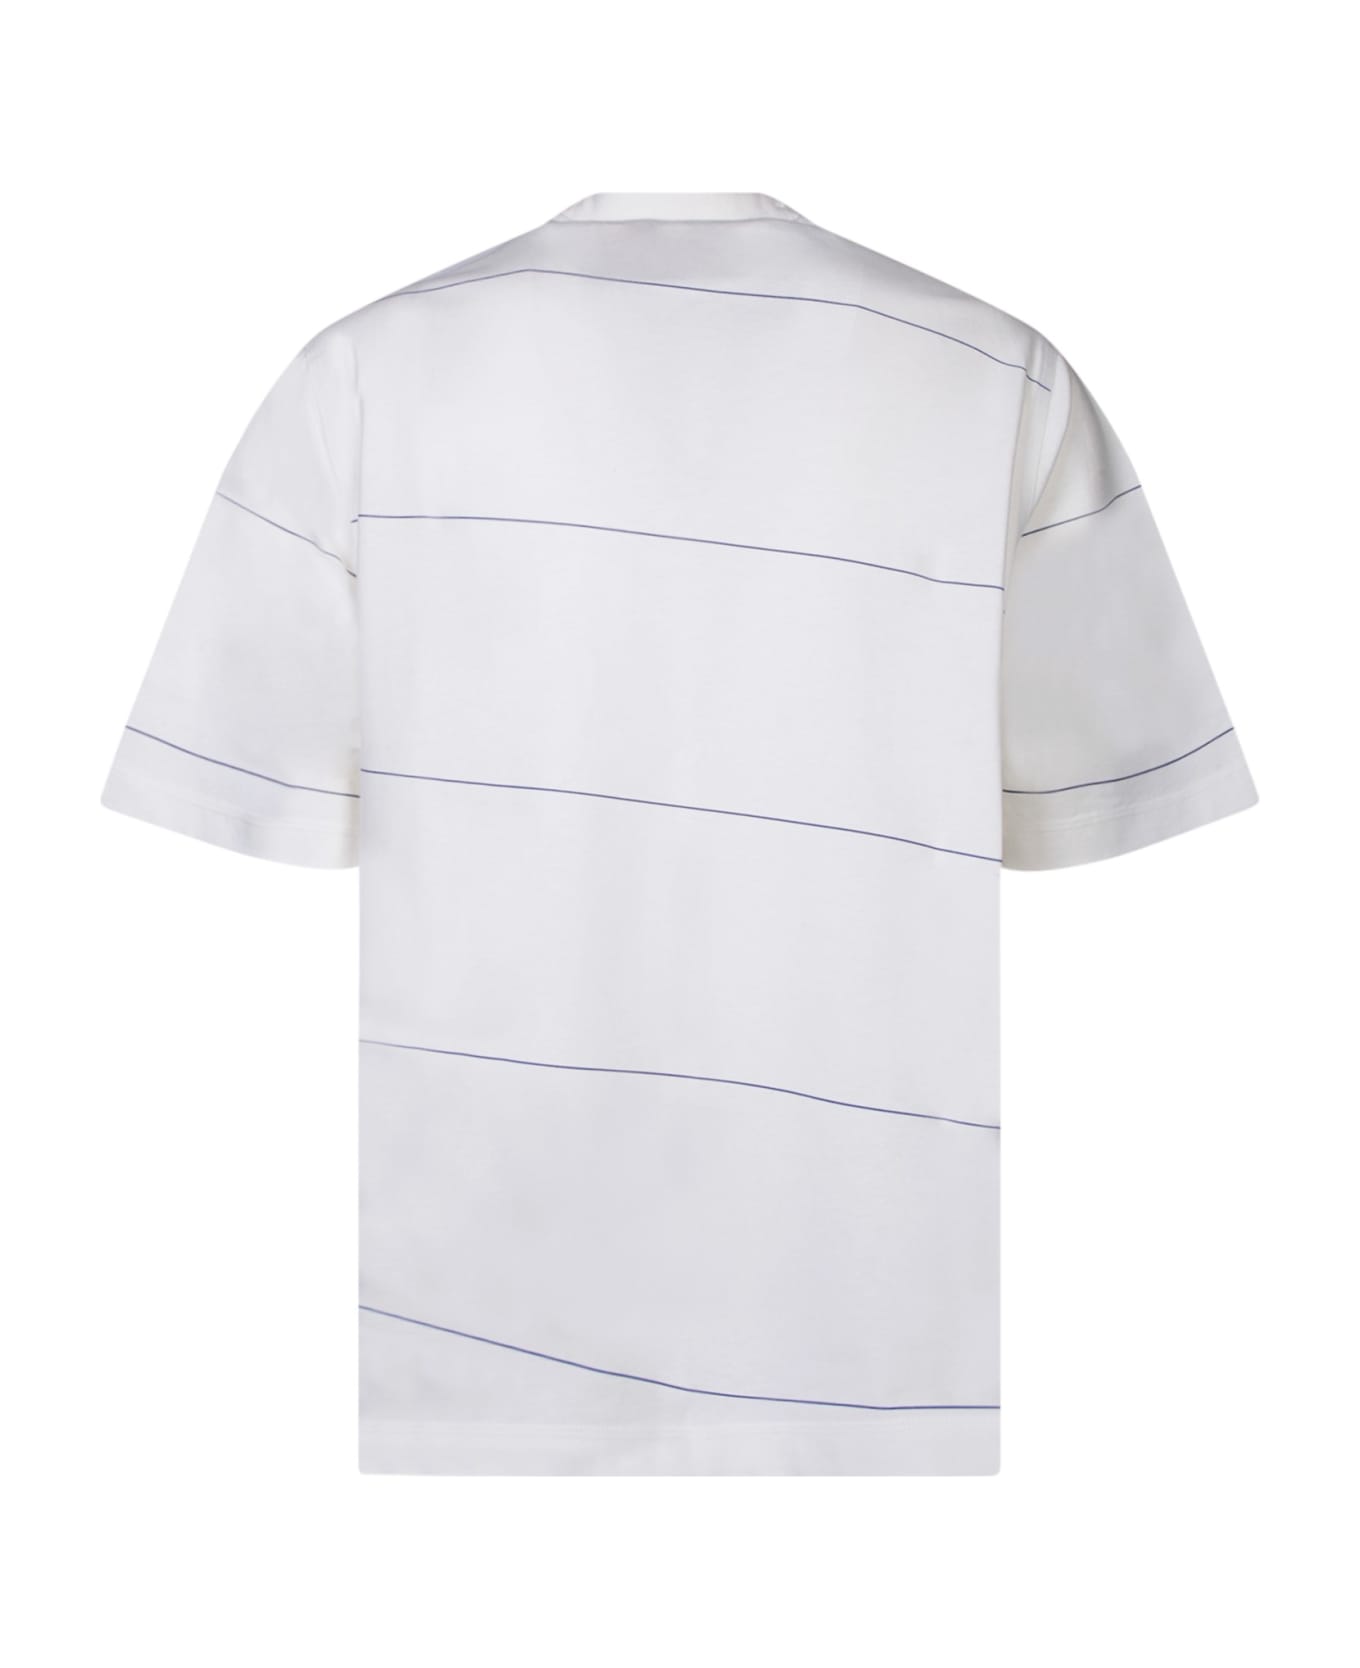 Burberry Striped White T-shirt - White